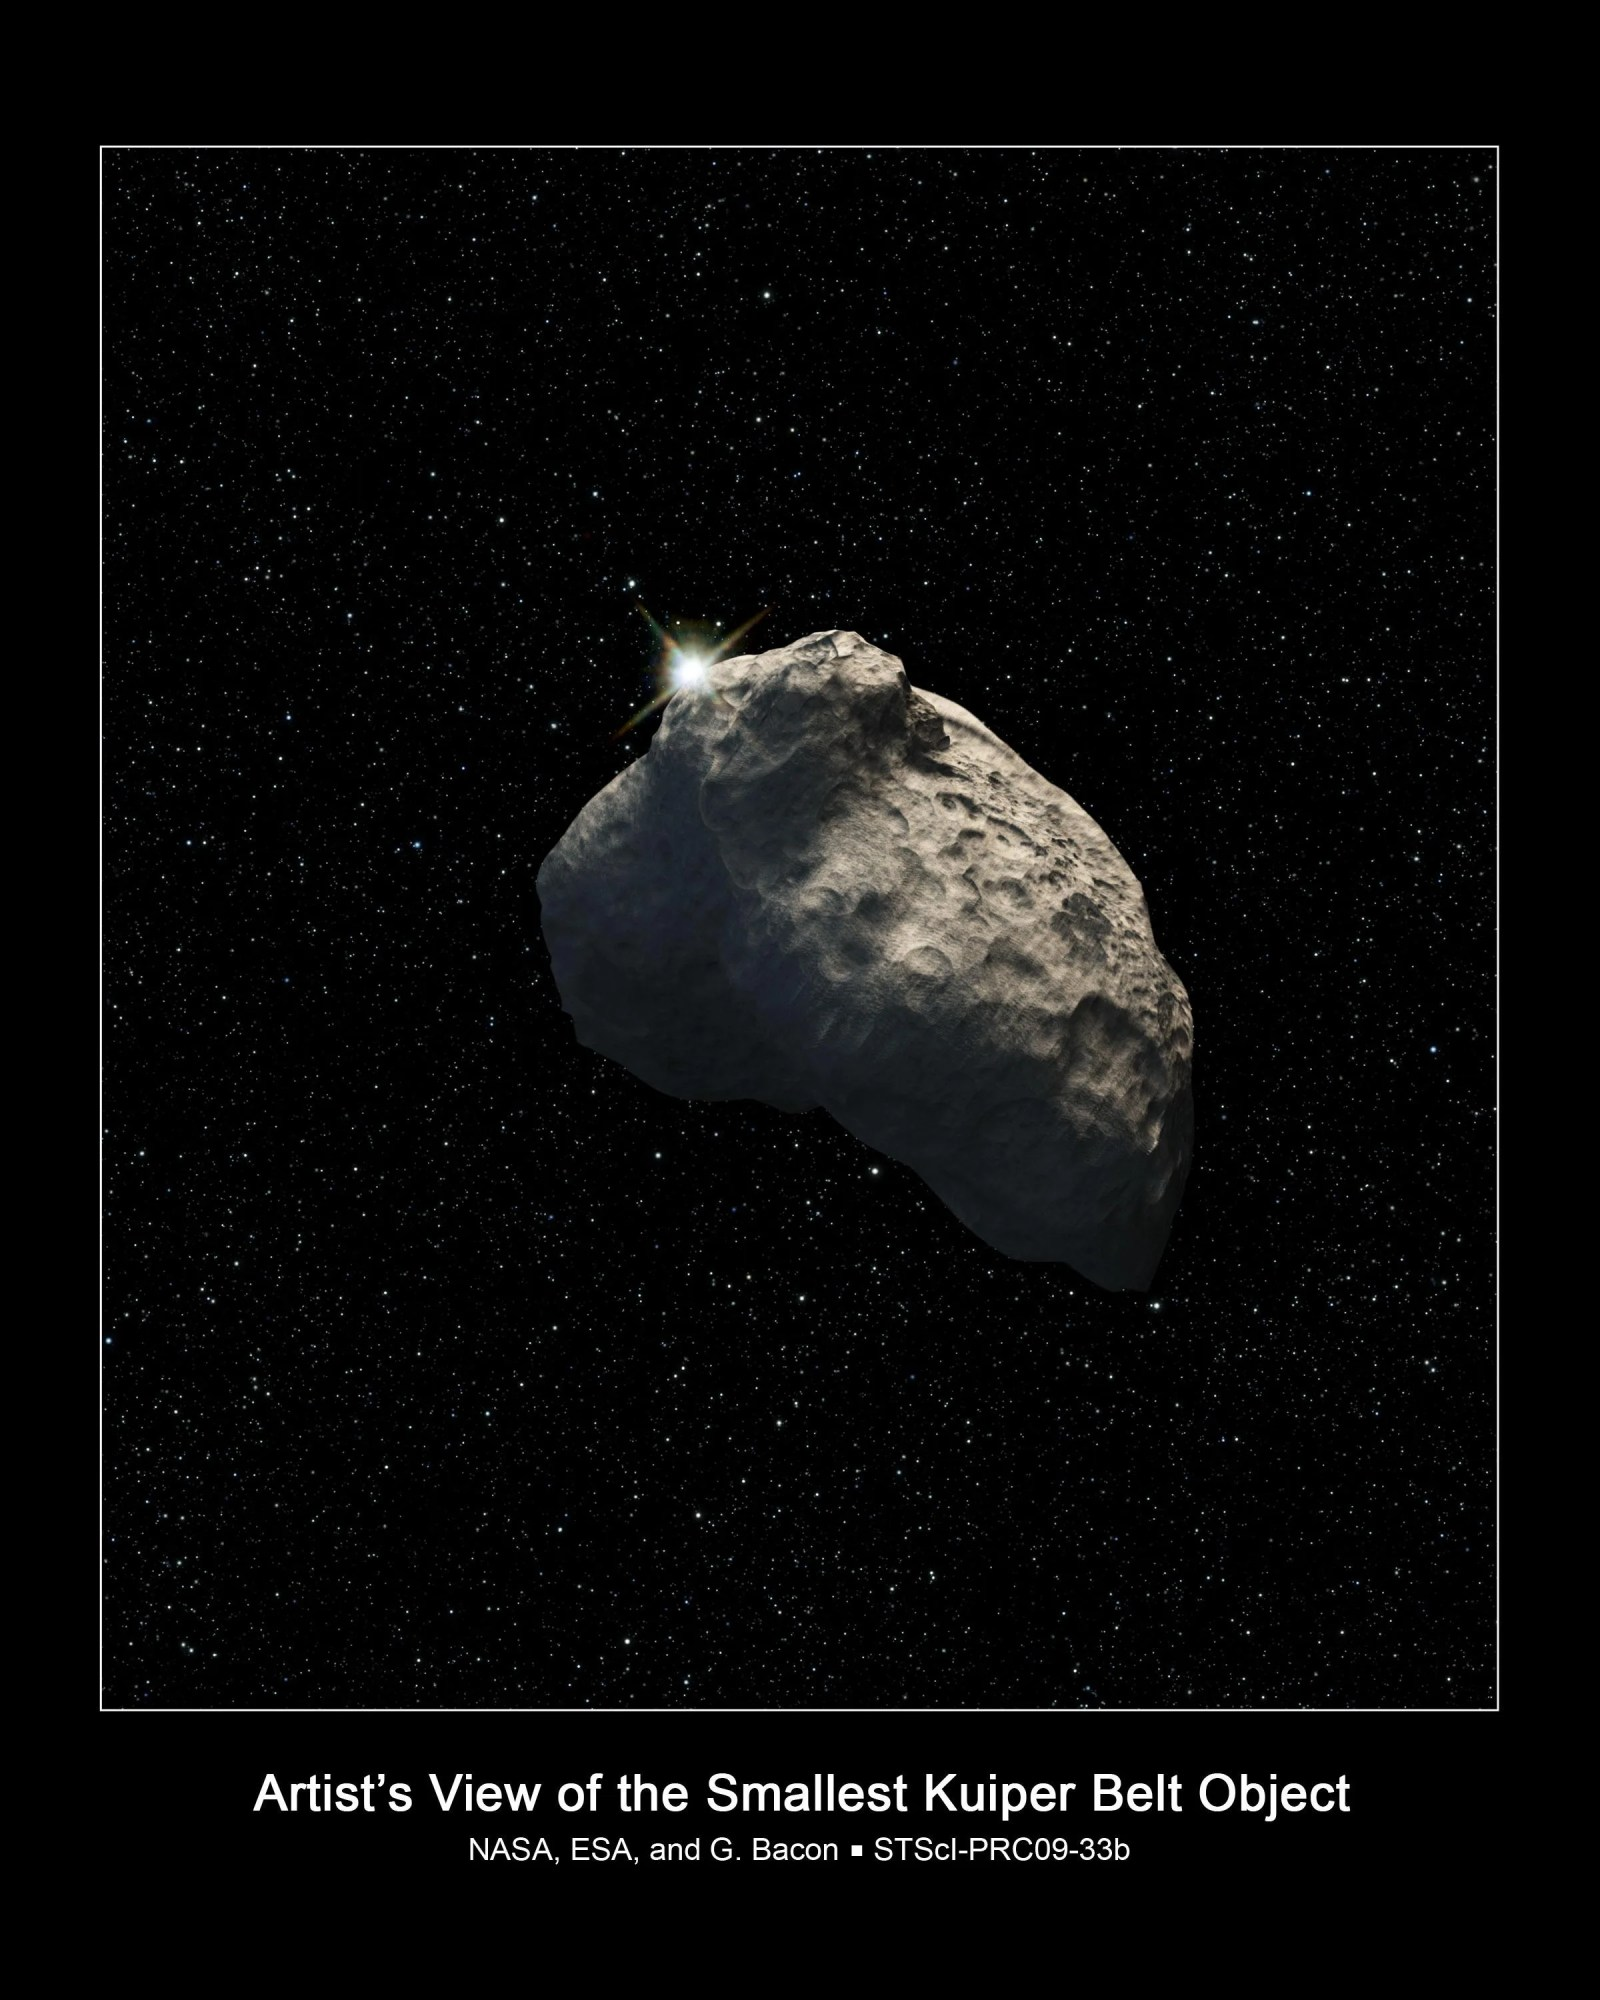 Hubble finds smallest kuiper belt object